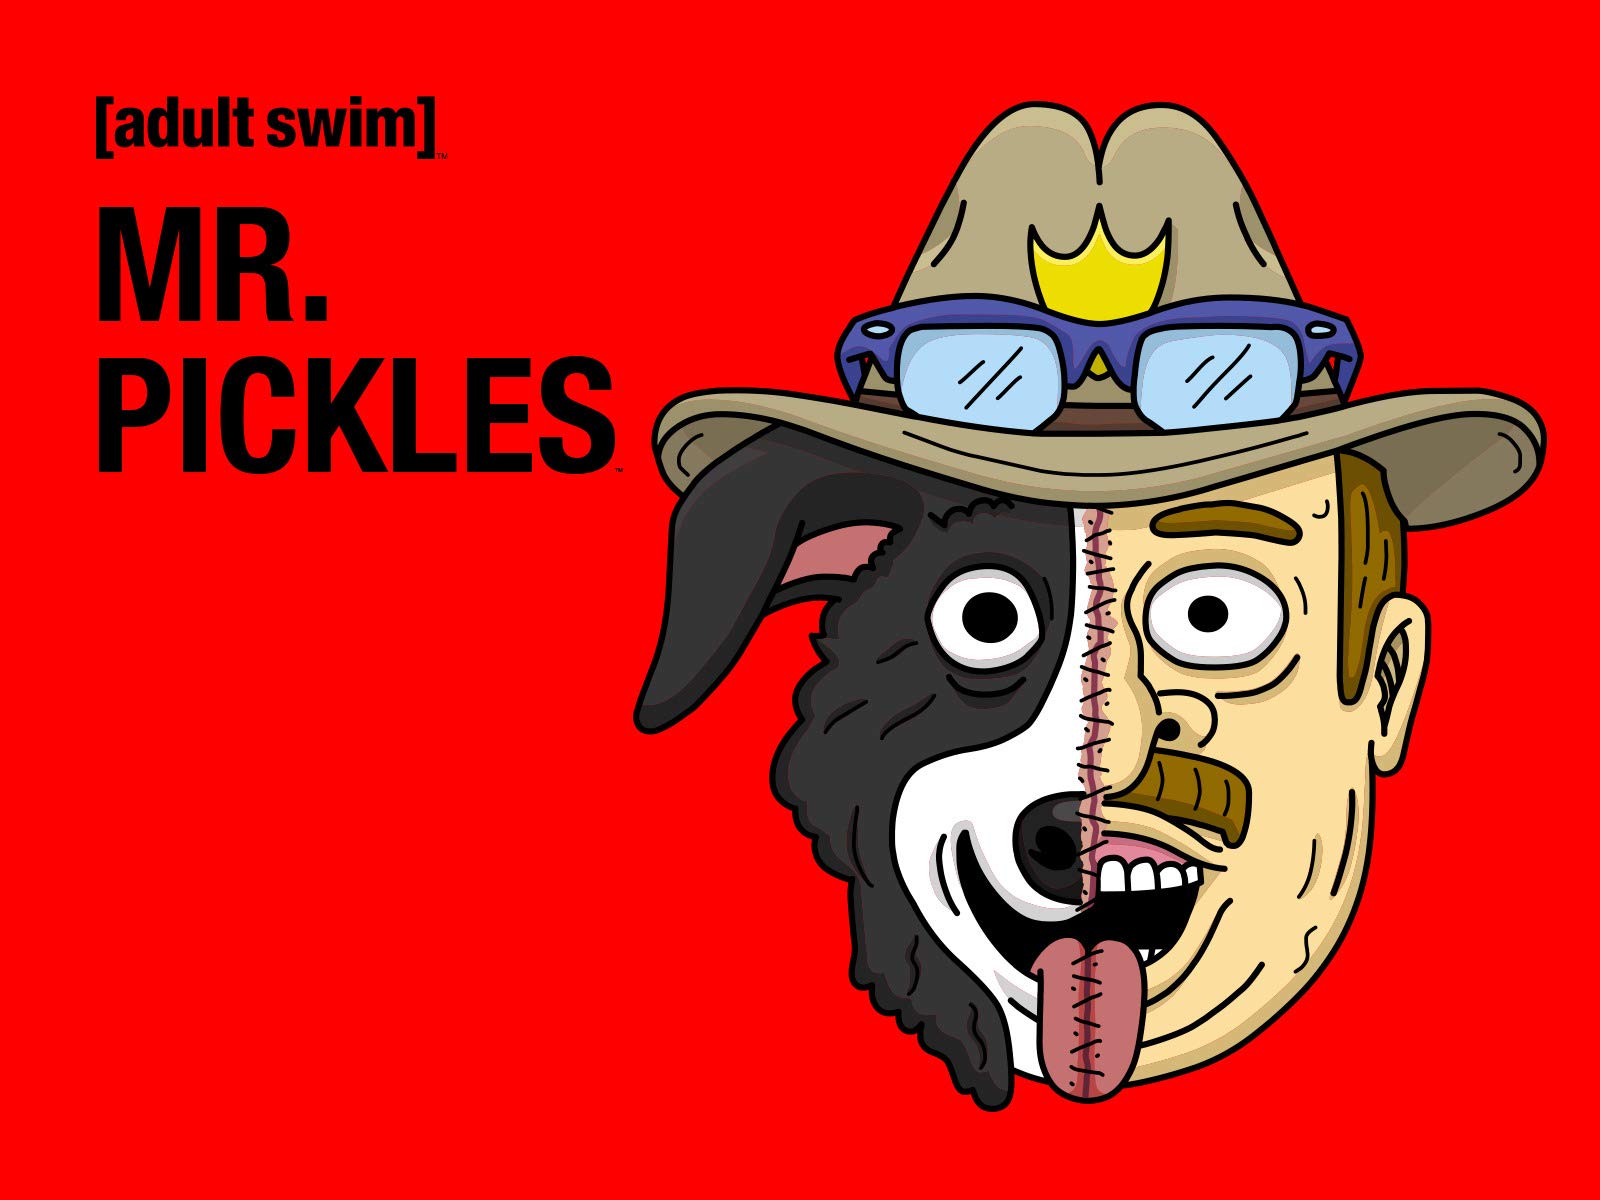 Prime Video: Mr. Pickles - Season 4